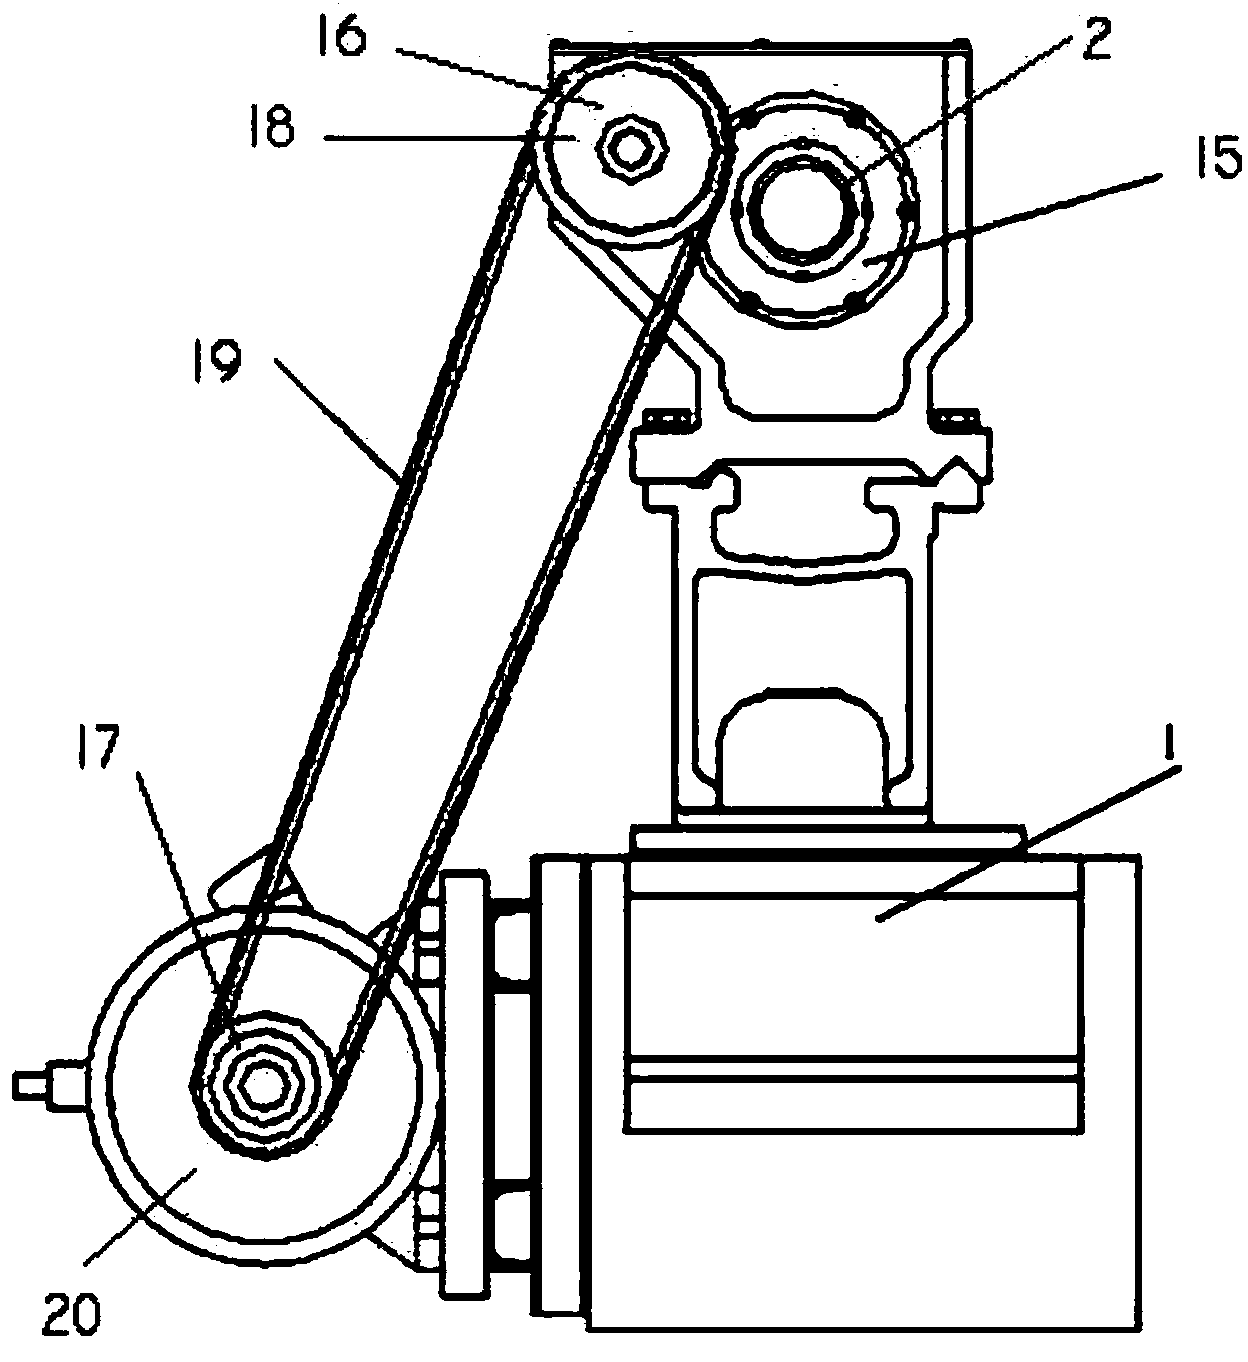 Numerical control processing machine tool of automobile half shaft